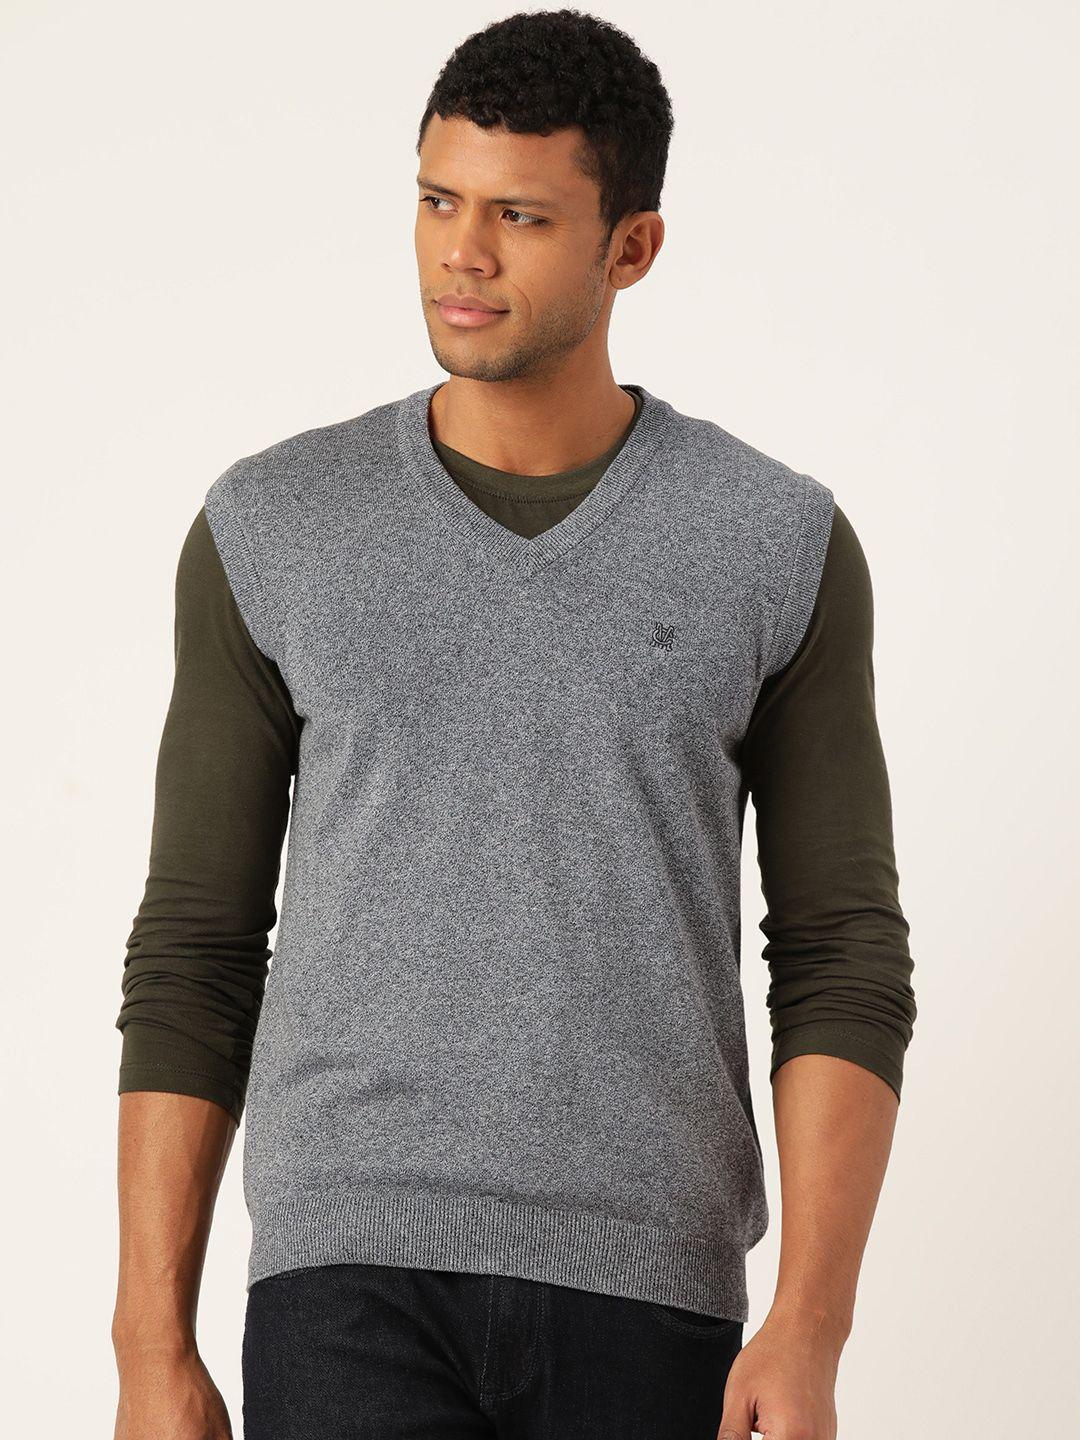 monte carlo v-neck regular sweater vest